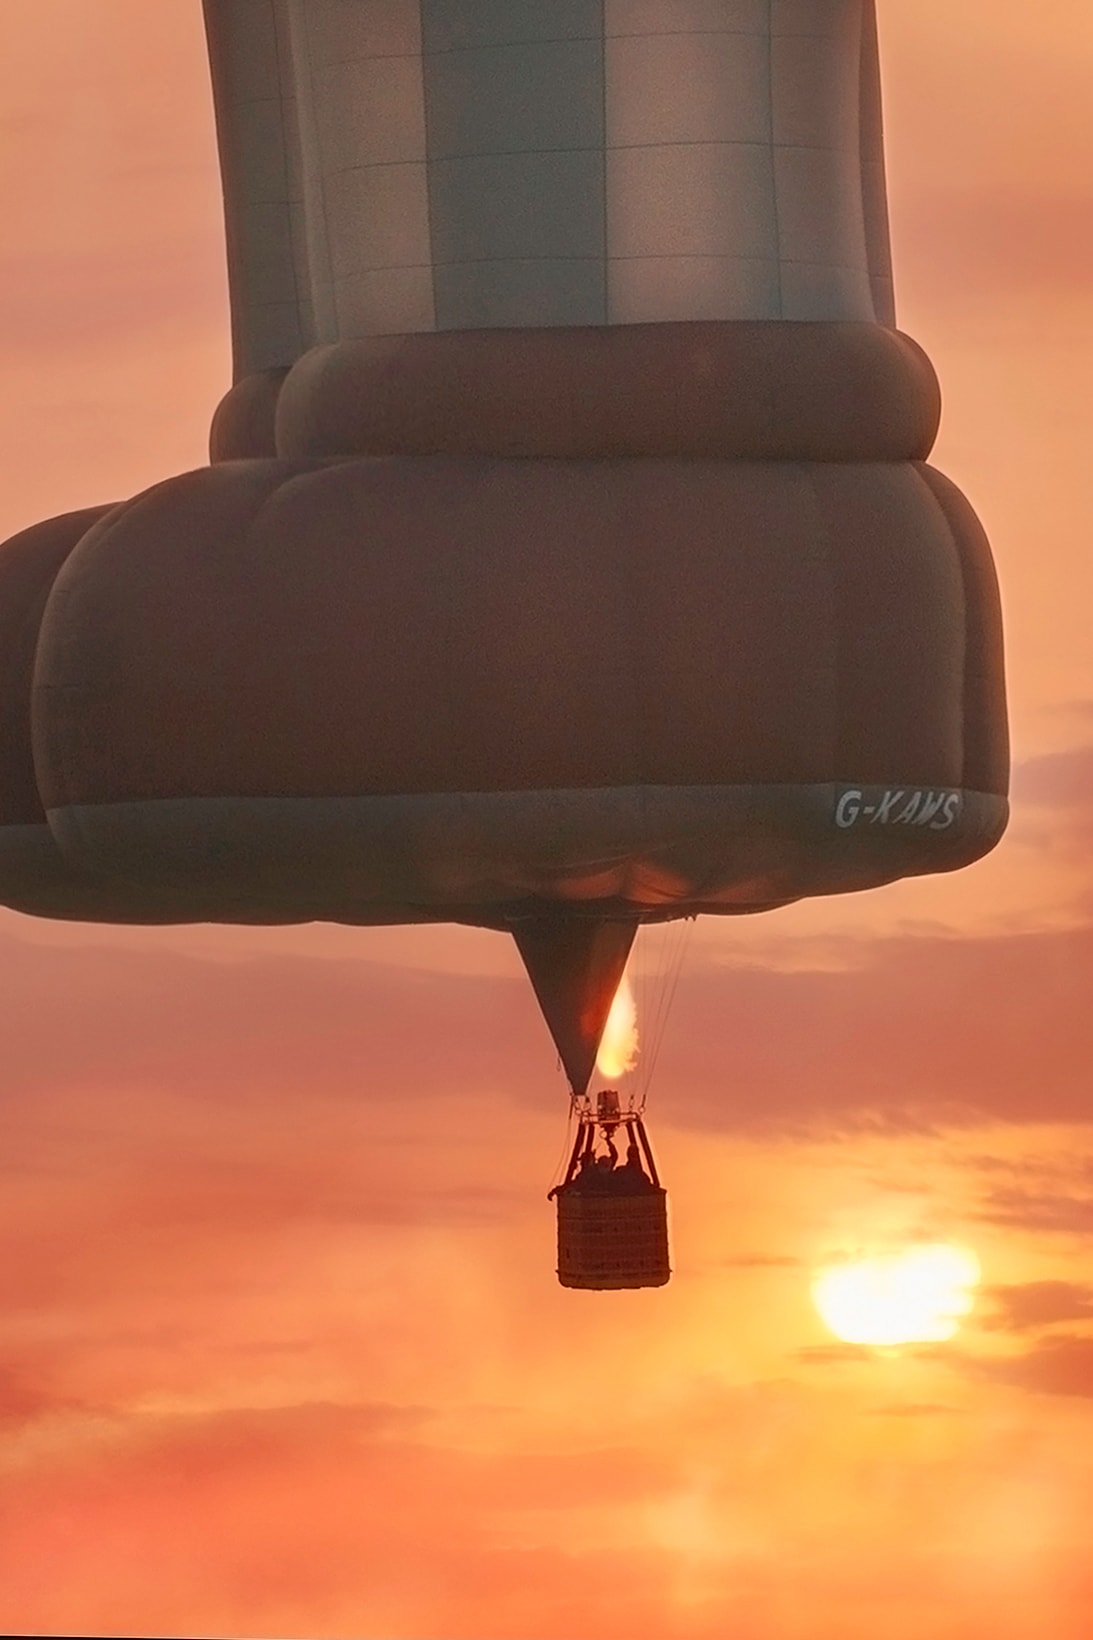 KAWS:HOLIDAY UK United Kingdom Hot-Air Balloon Art COMPANION